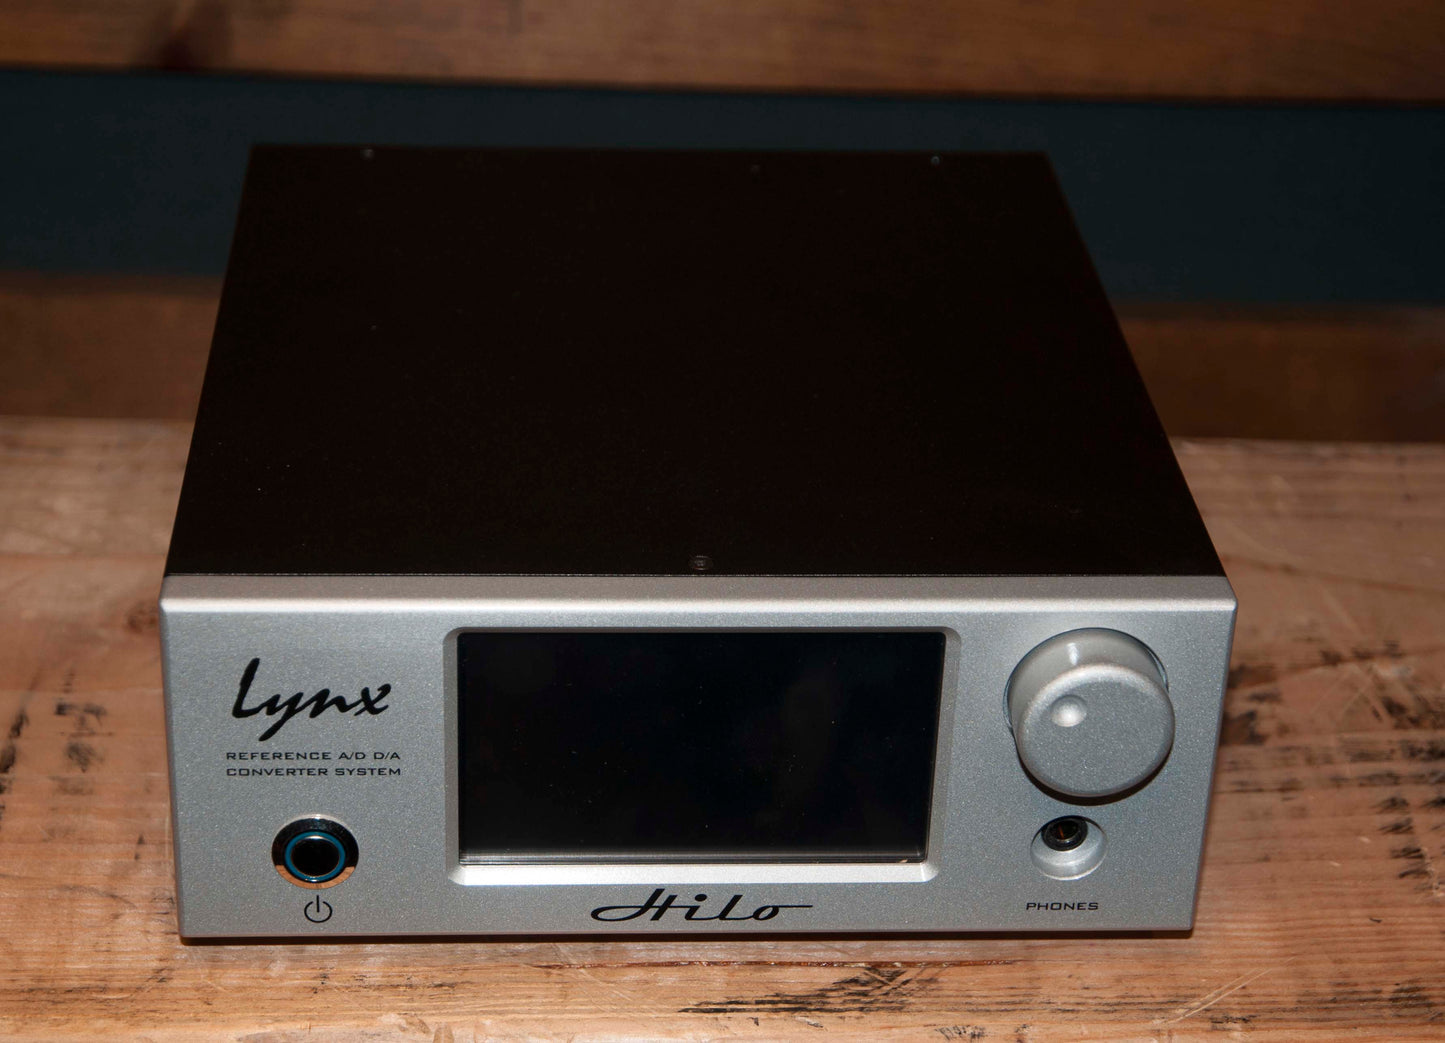 Lynx HiLo A/D D/A Converter System, Silver